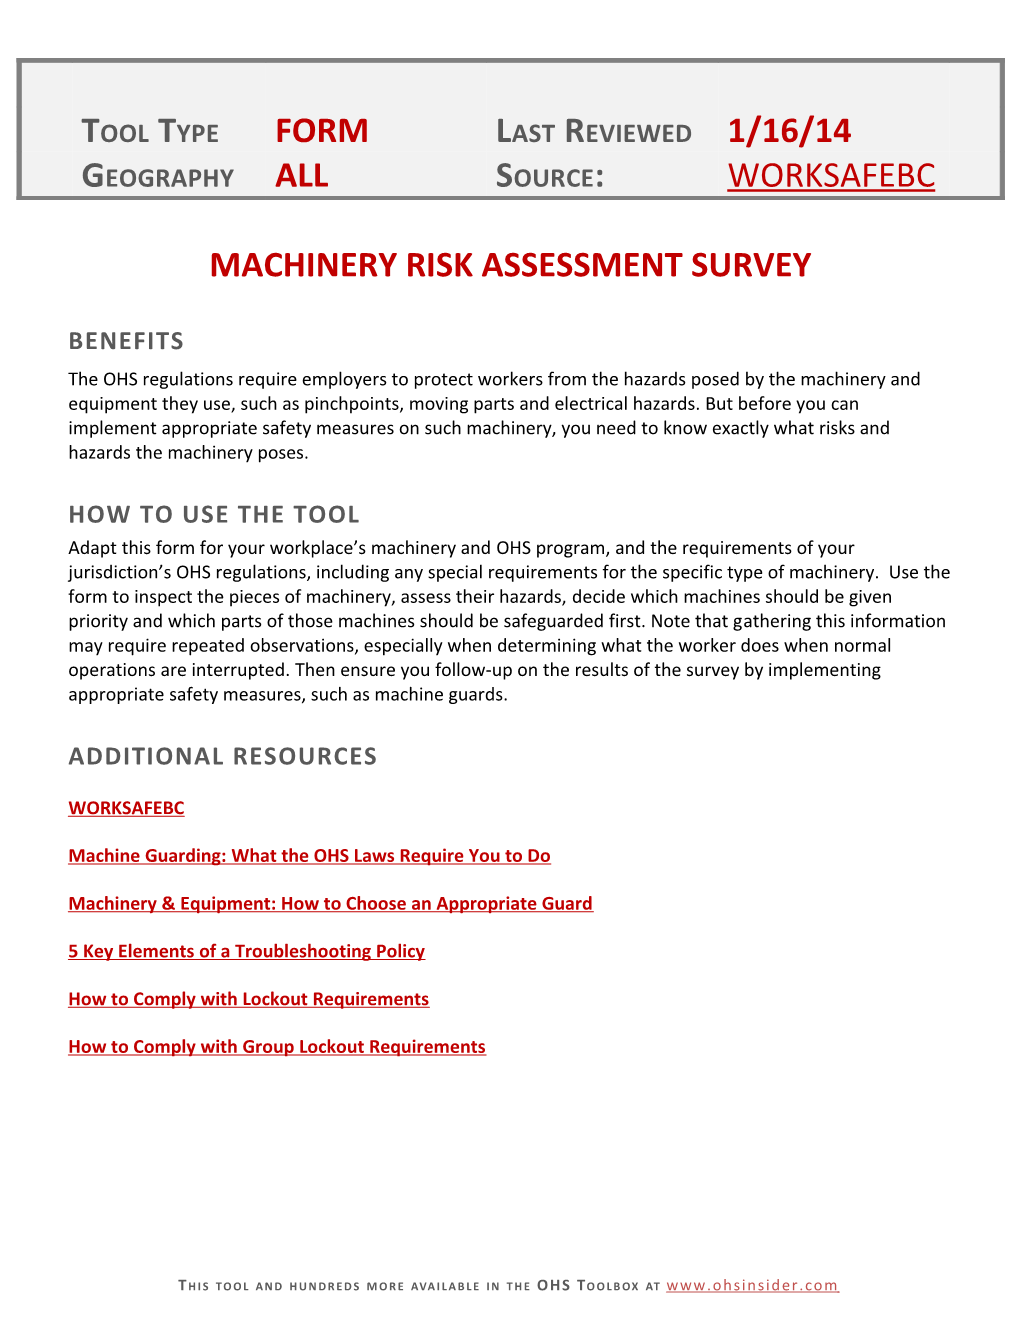 Machinery Risk Assessment Survey